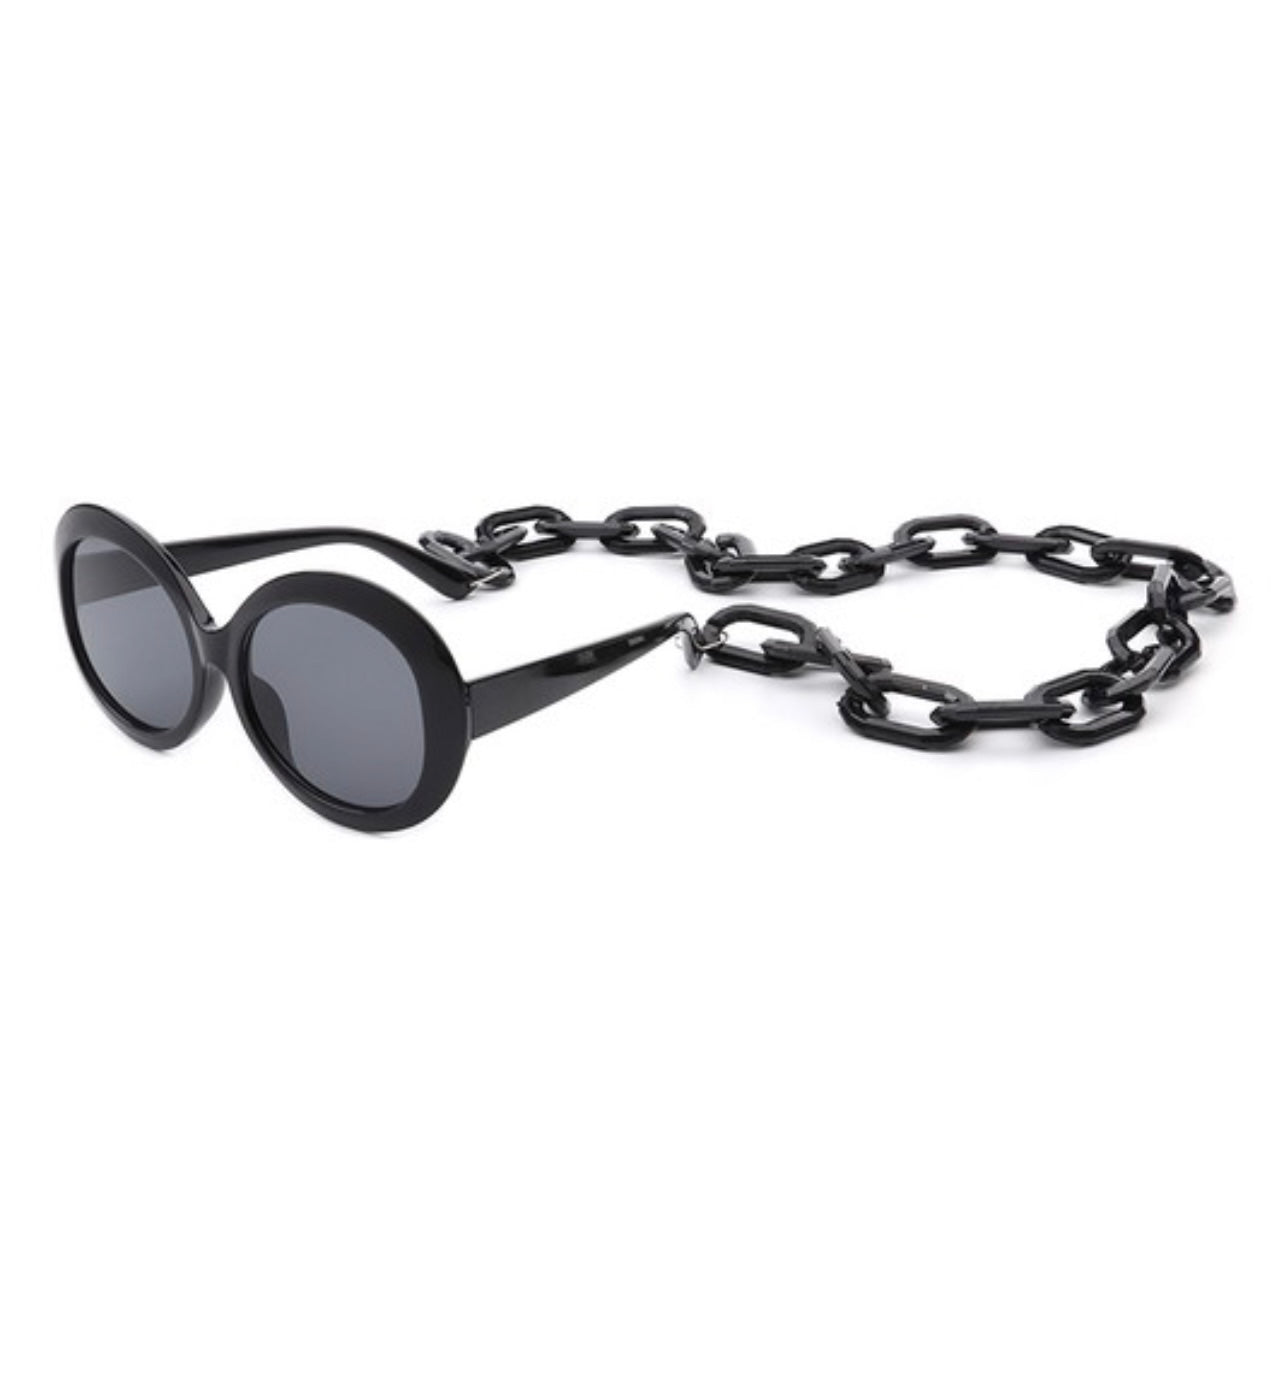 Shade On A Chain Sunglasses